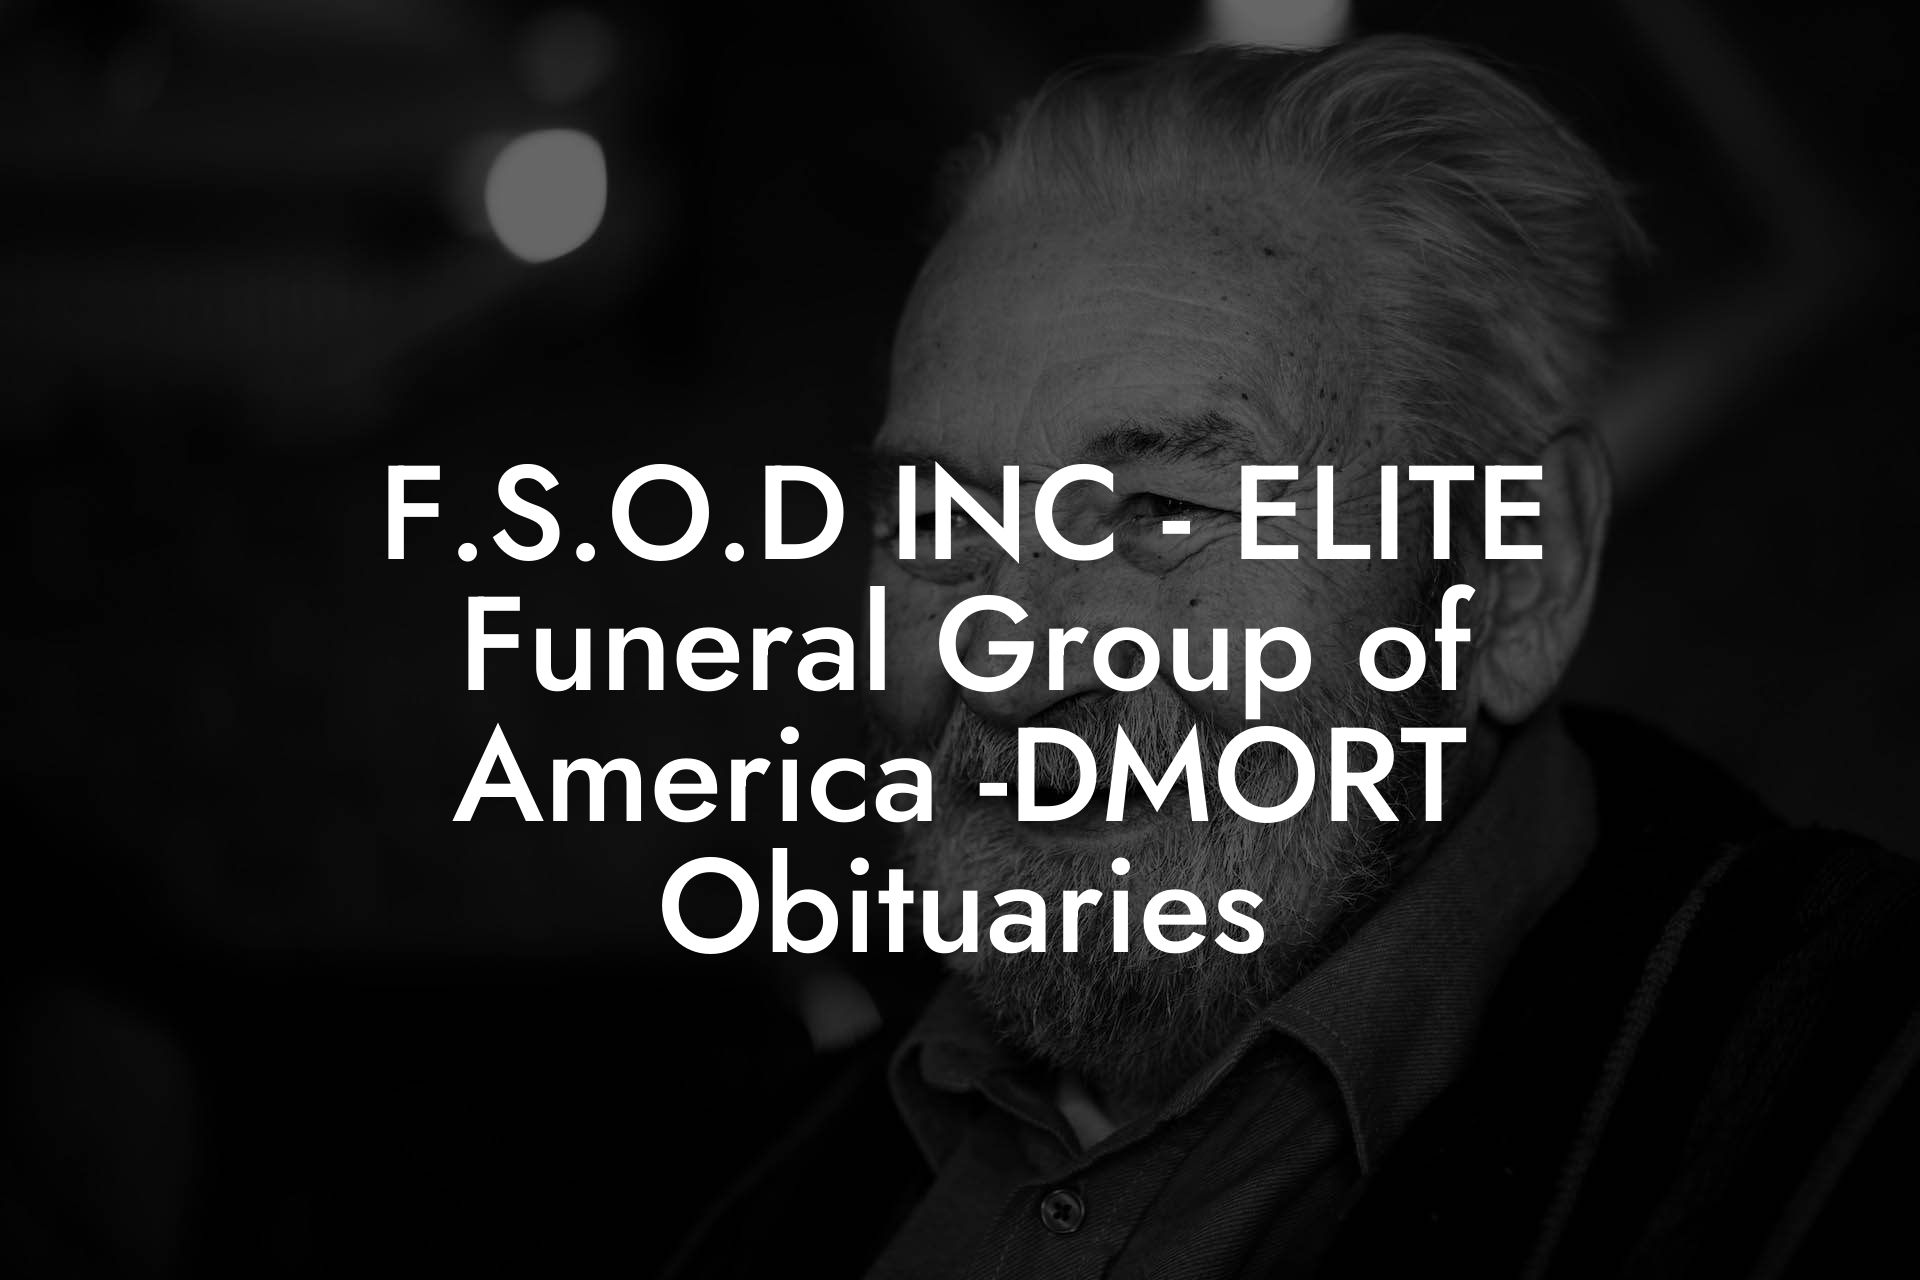 F.S.O.D INC - ELITE Funeral Group of America -DMORT Obituaries